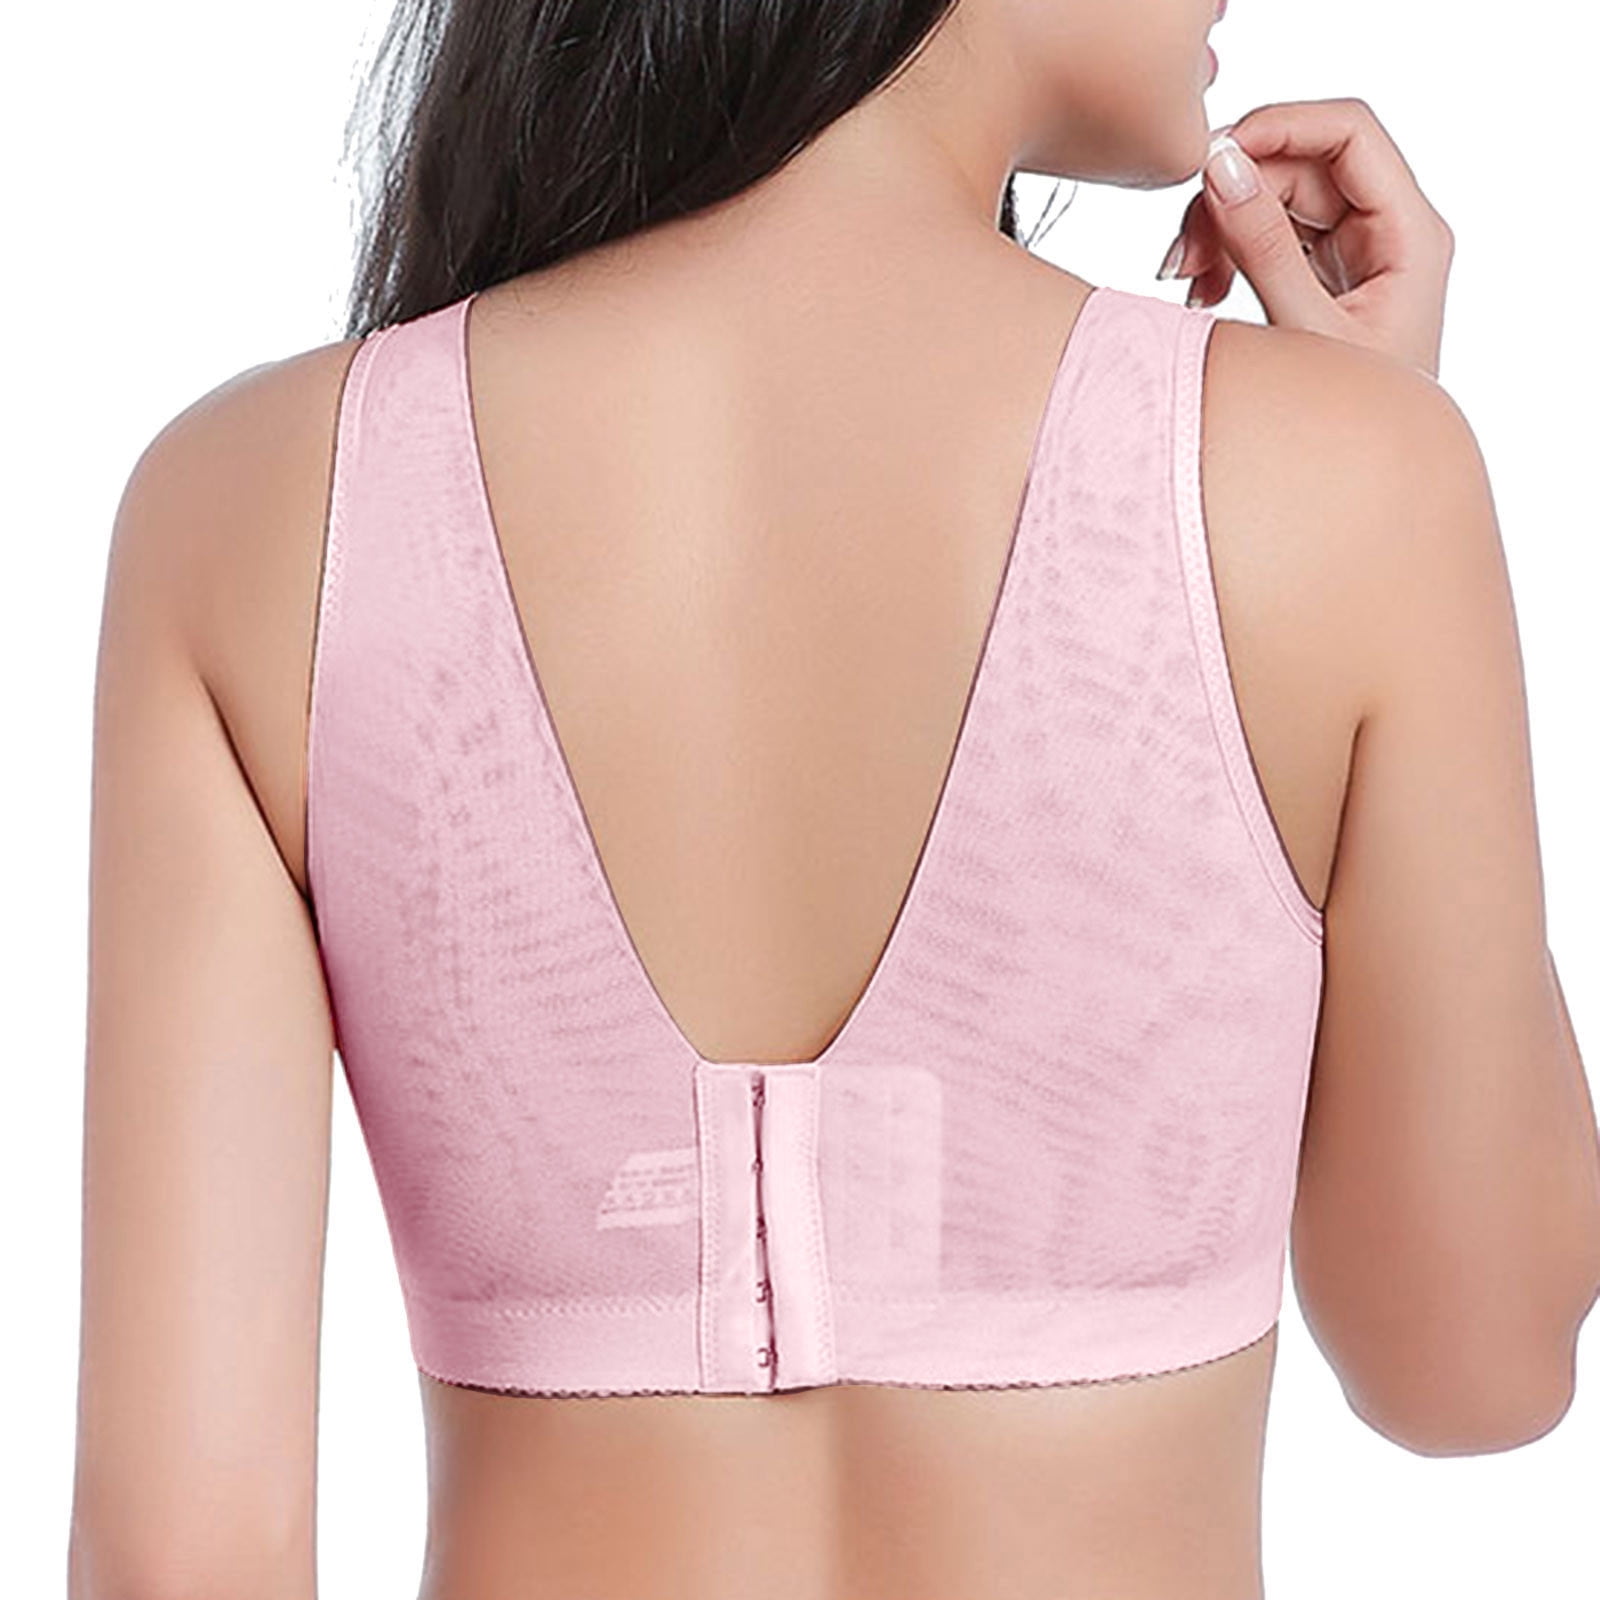 adviicd Plus Size Bras for Women Women's Push Up Lace Bra Comfort